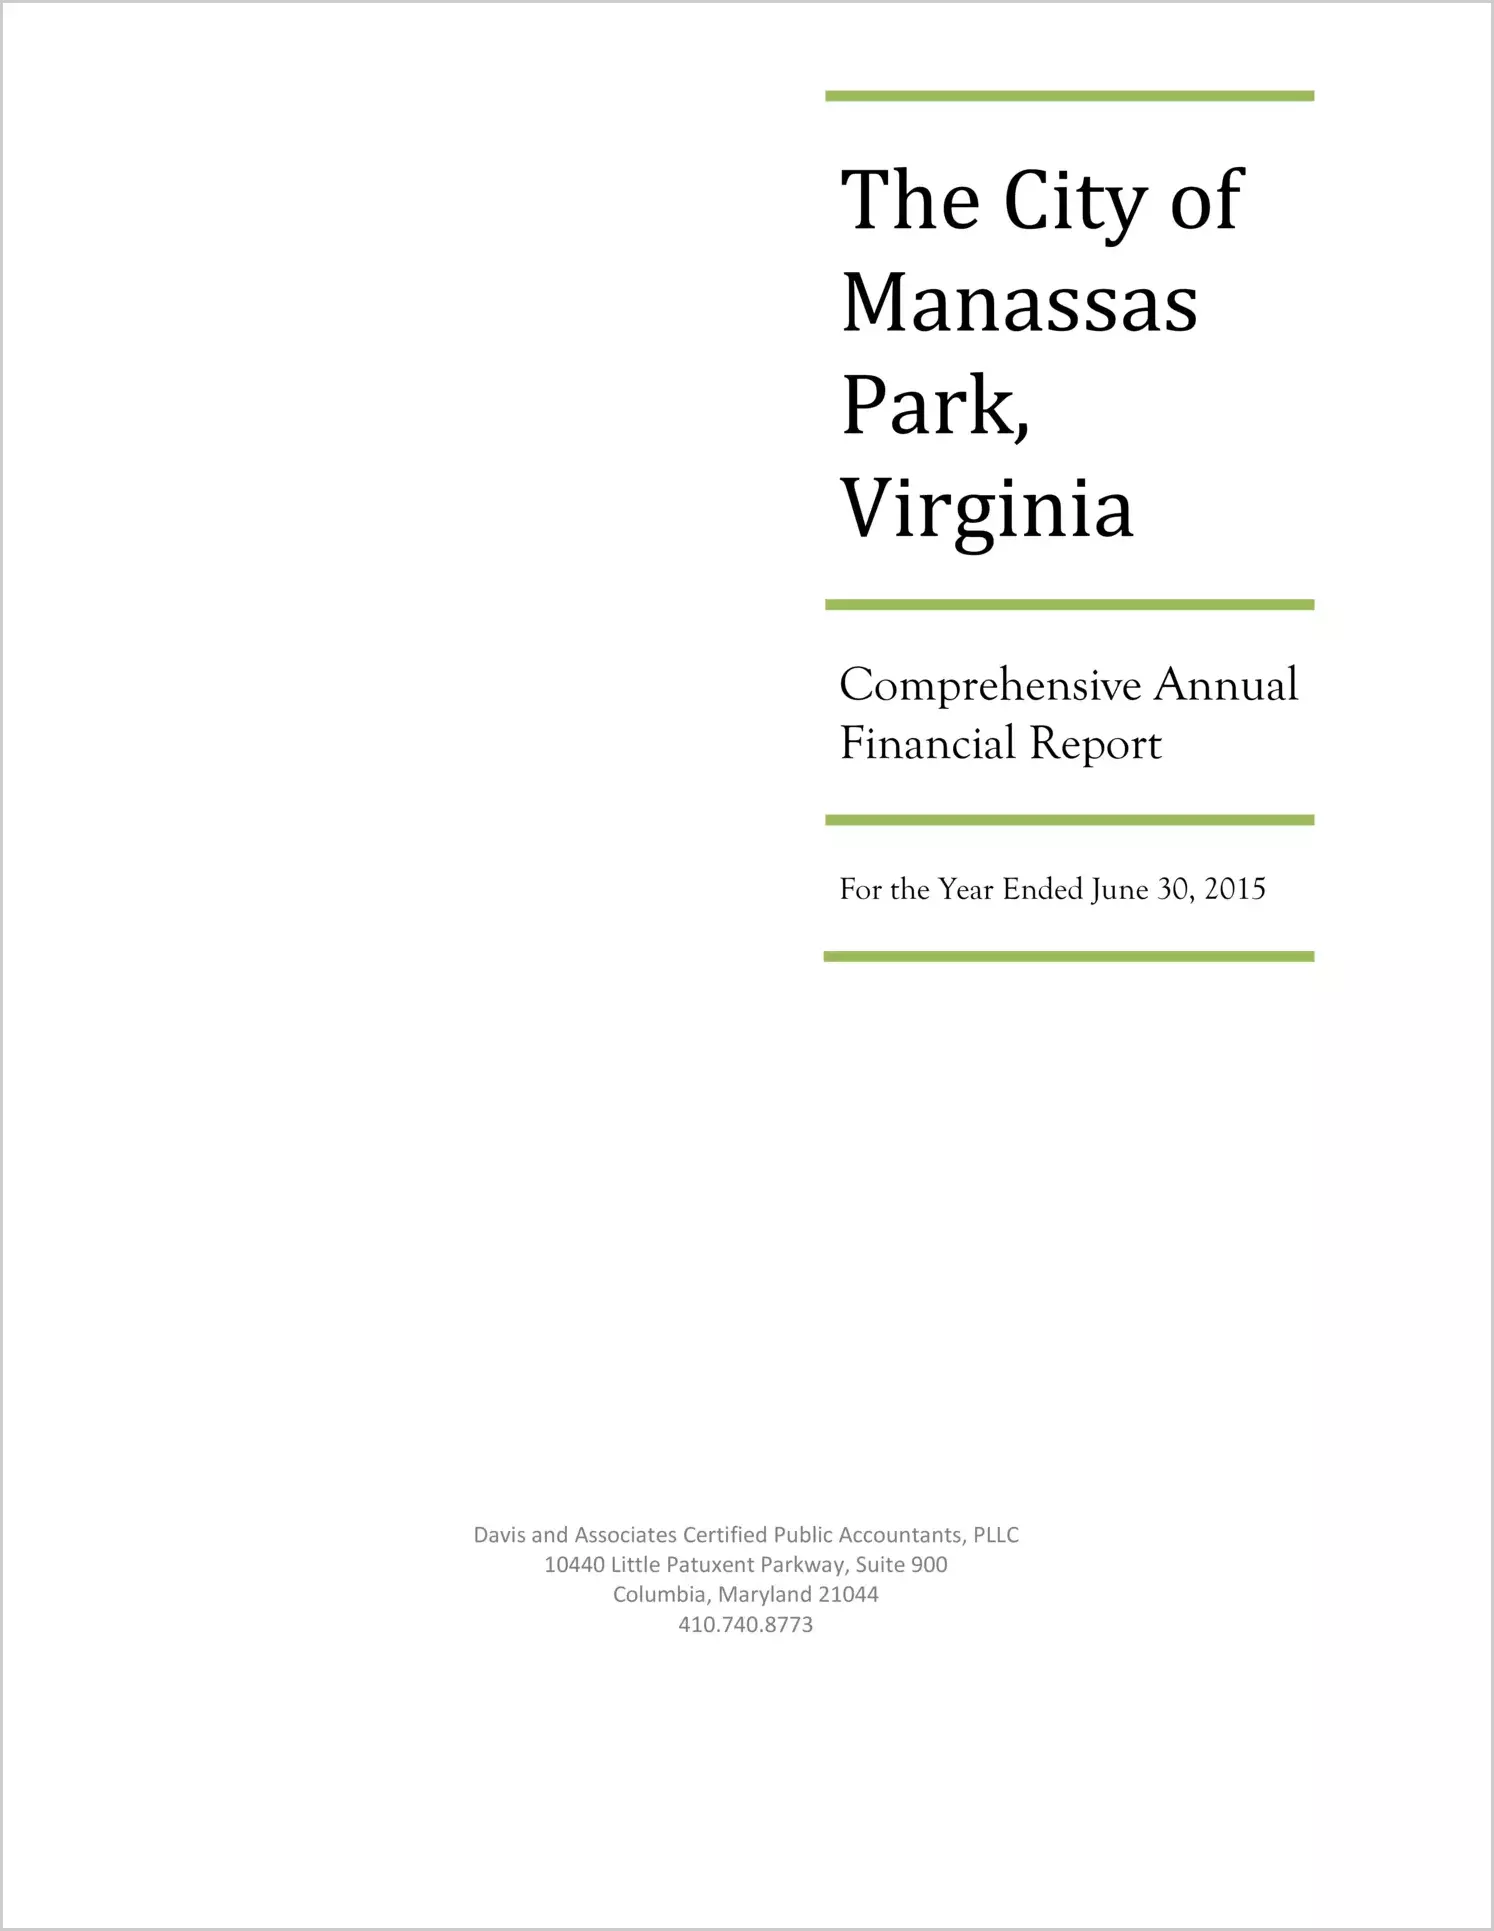 2015 Annual Financial Report for City of Manassas Park